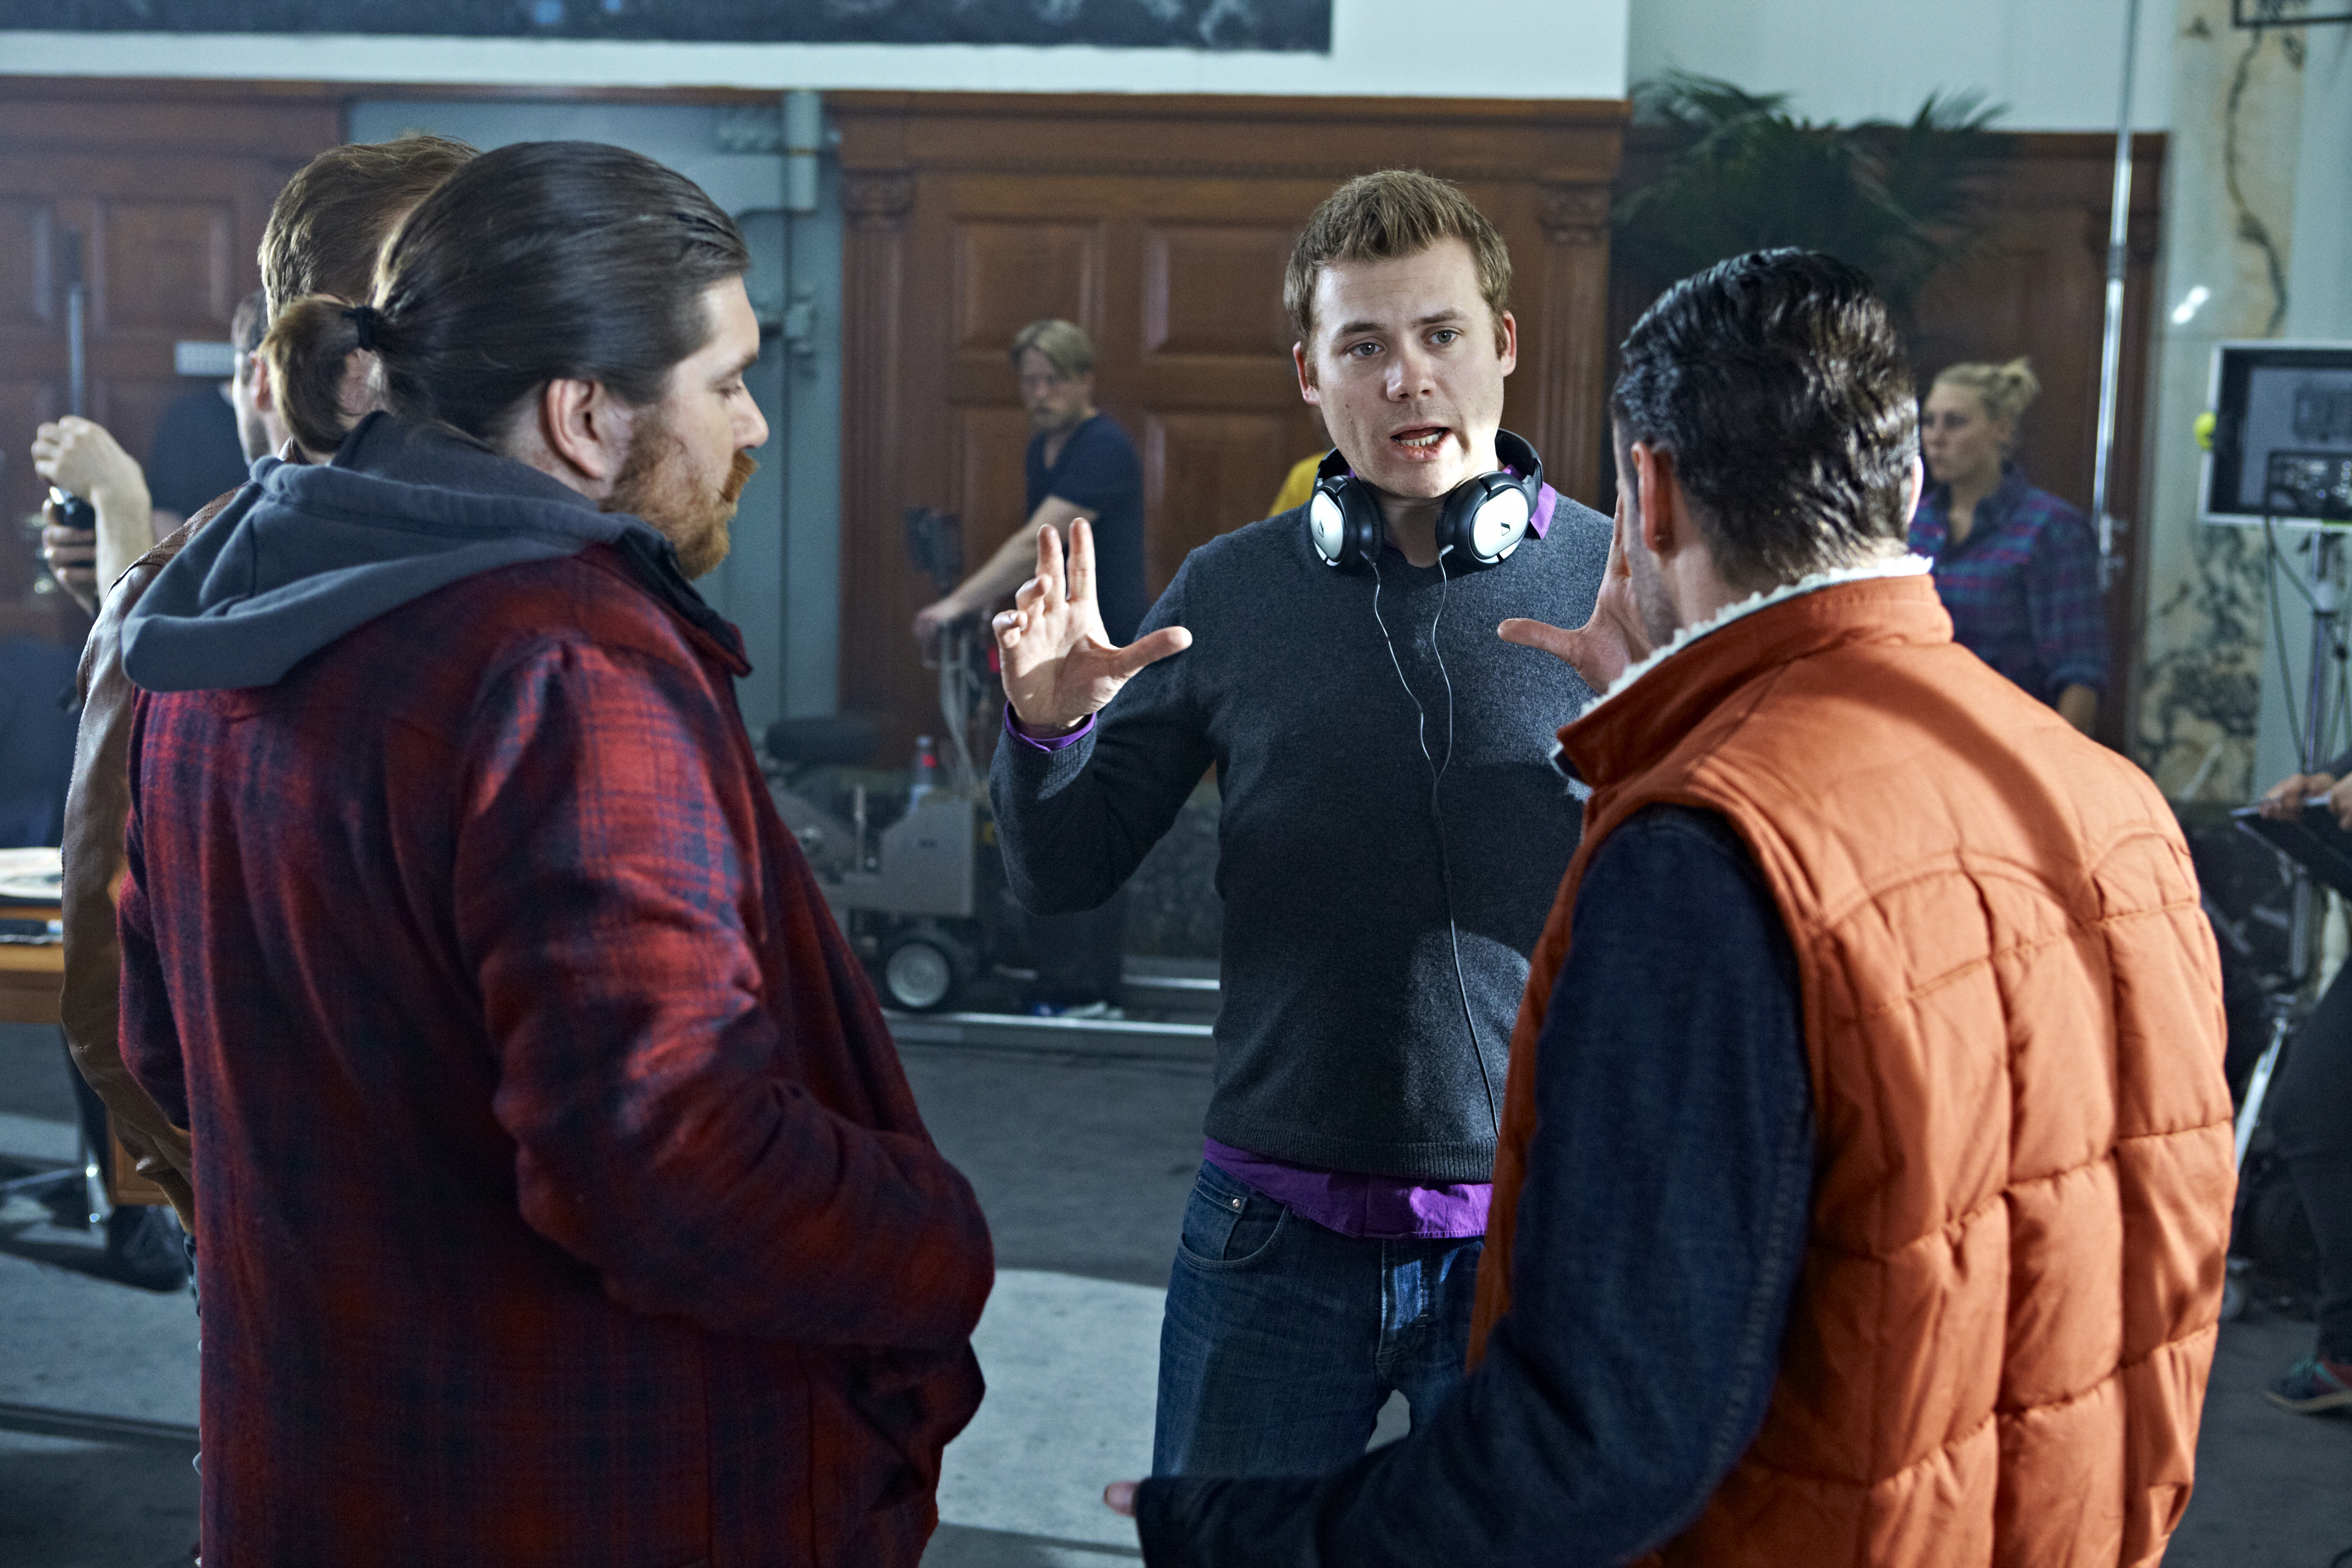 Rasmus Heide directing actors Jonatan Spang, Rasmus Bjerg and Mick Øgendahl on the set of 